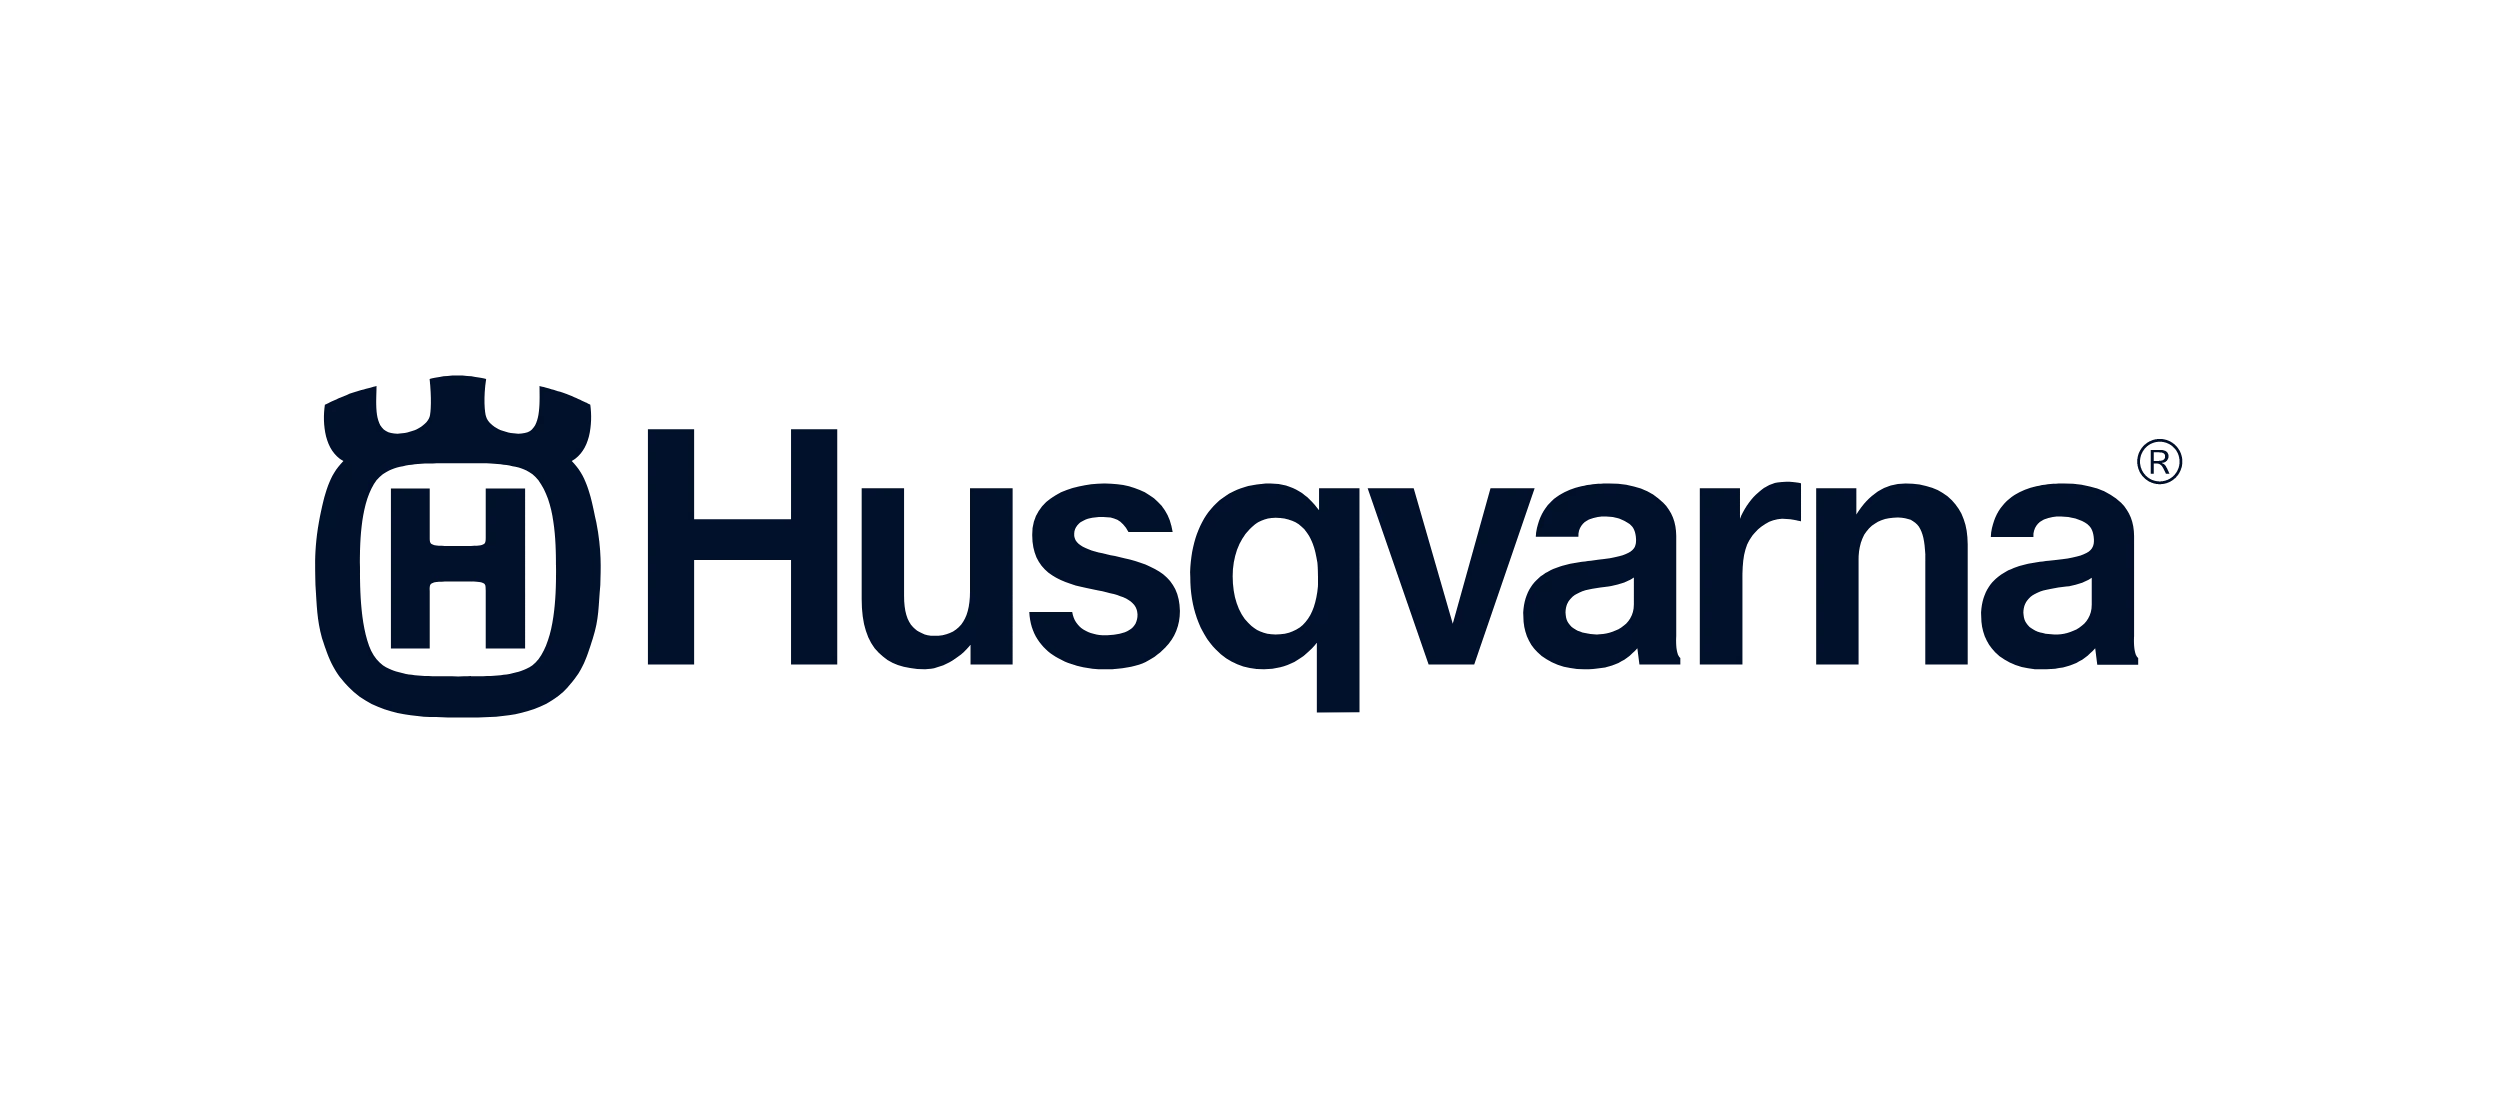 Husqvarna monochromatic logo